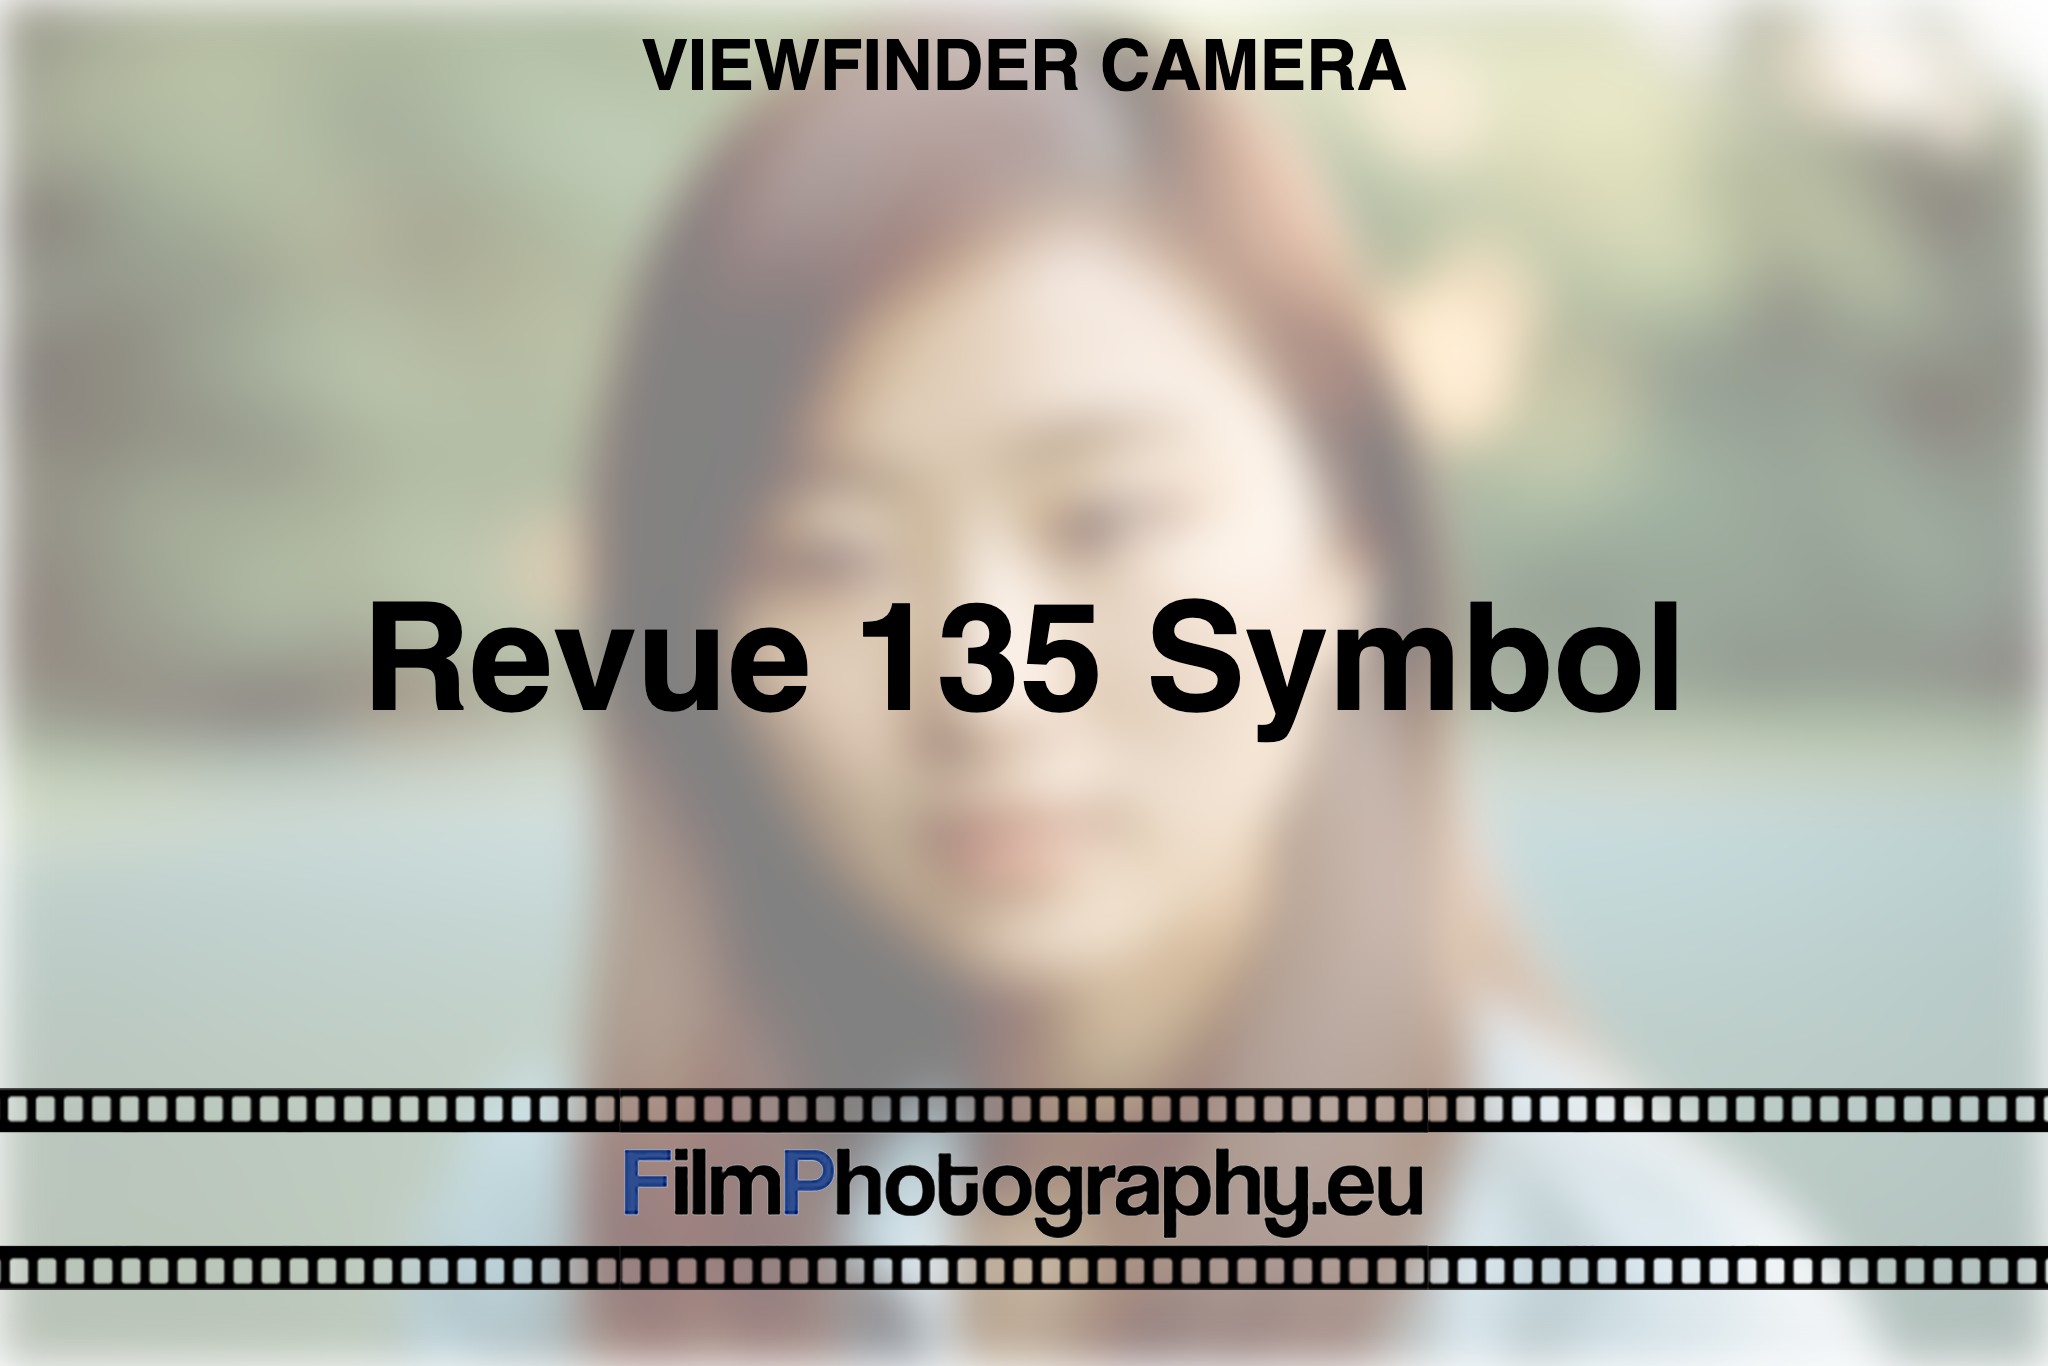 revue-135-symbol-viewfinder-camera-bnv